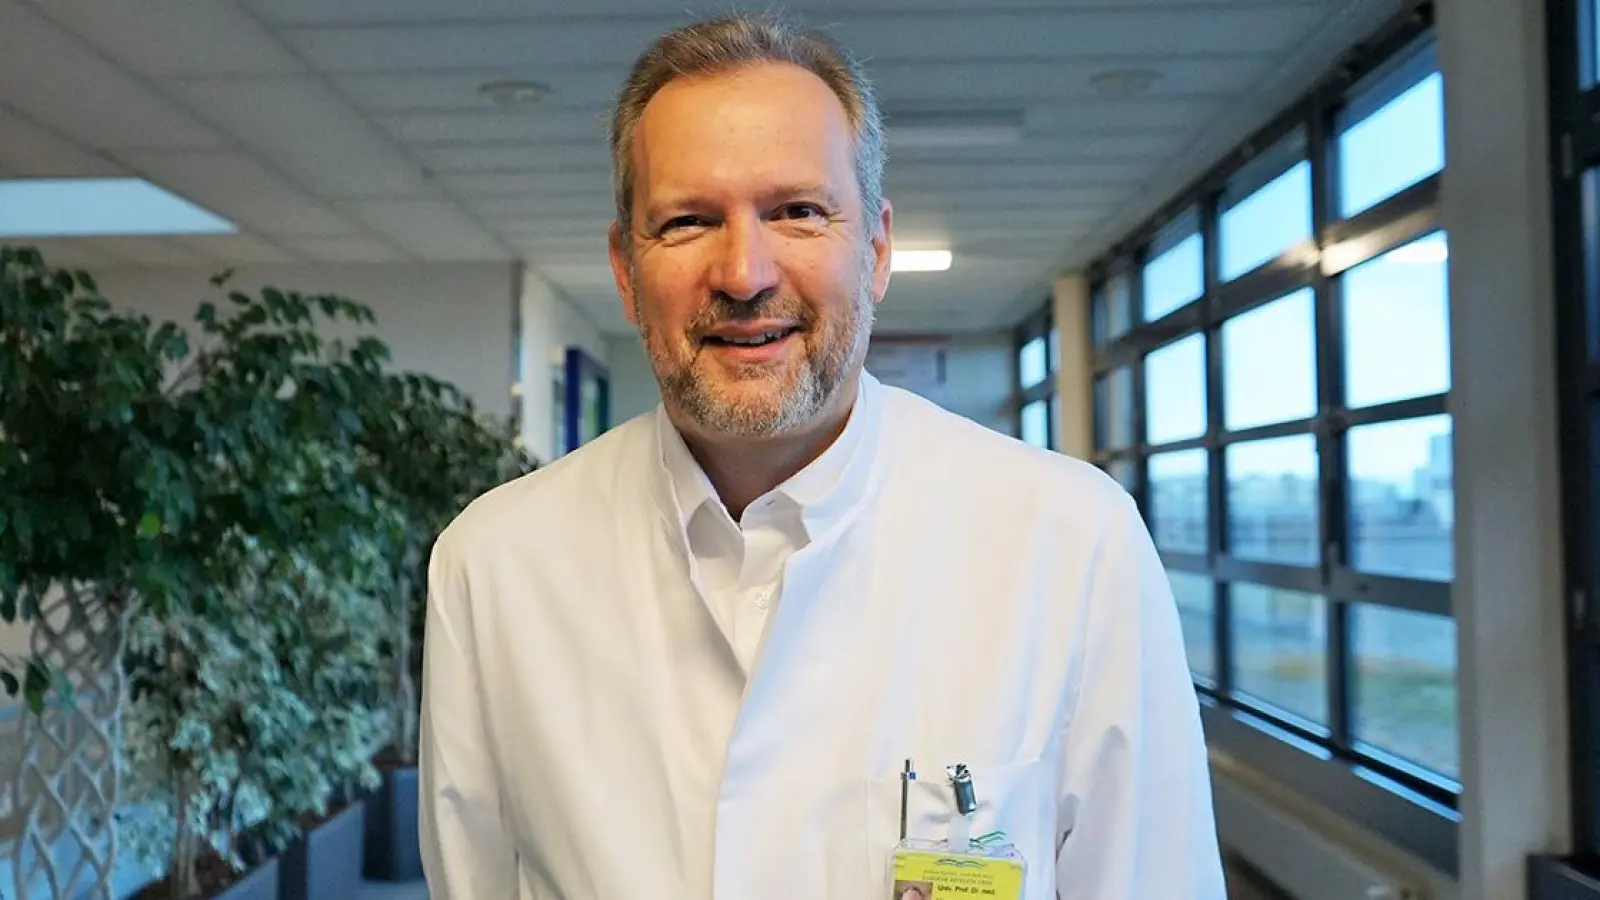 Herzlich Willkommen Prof. Dr. Heppner! (Foto: red)